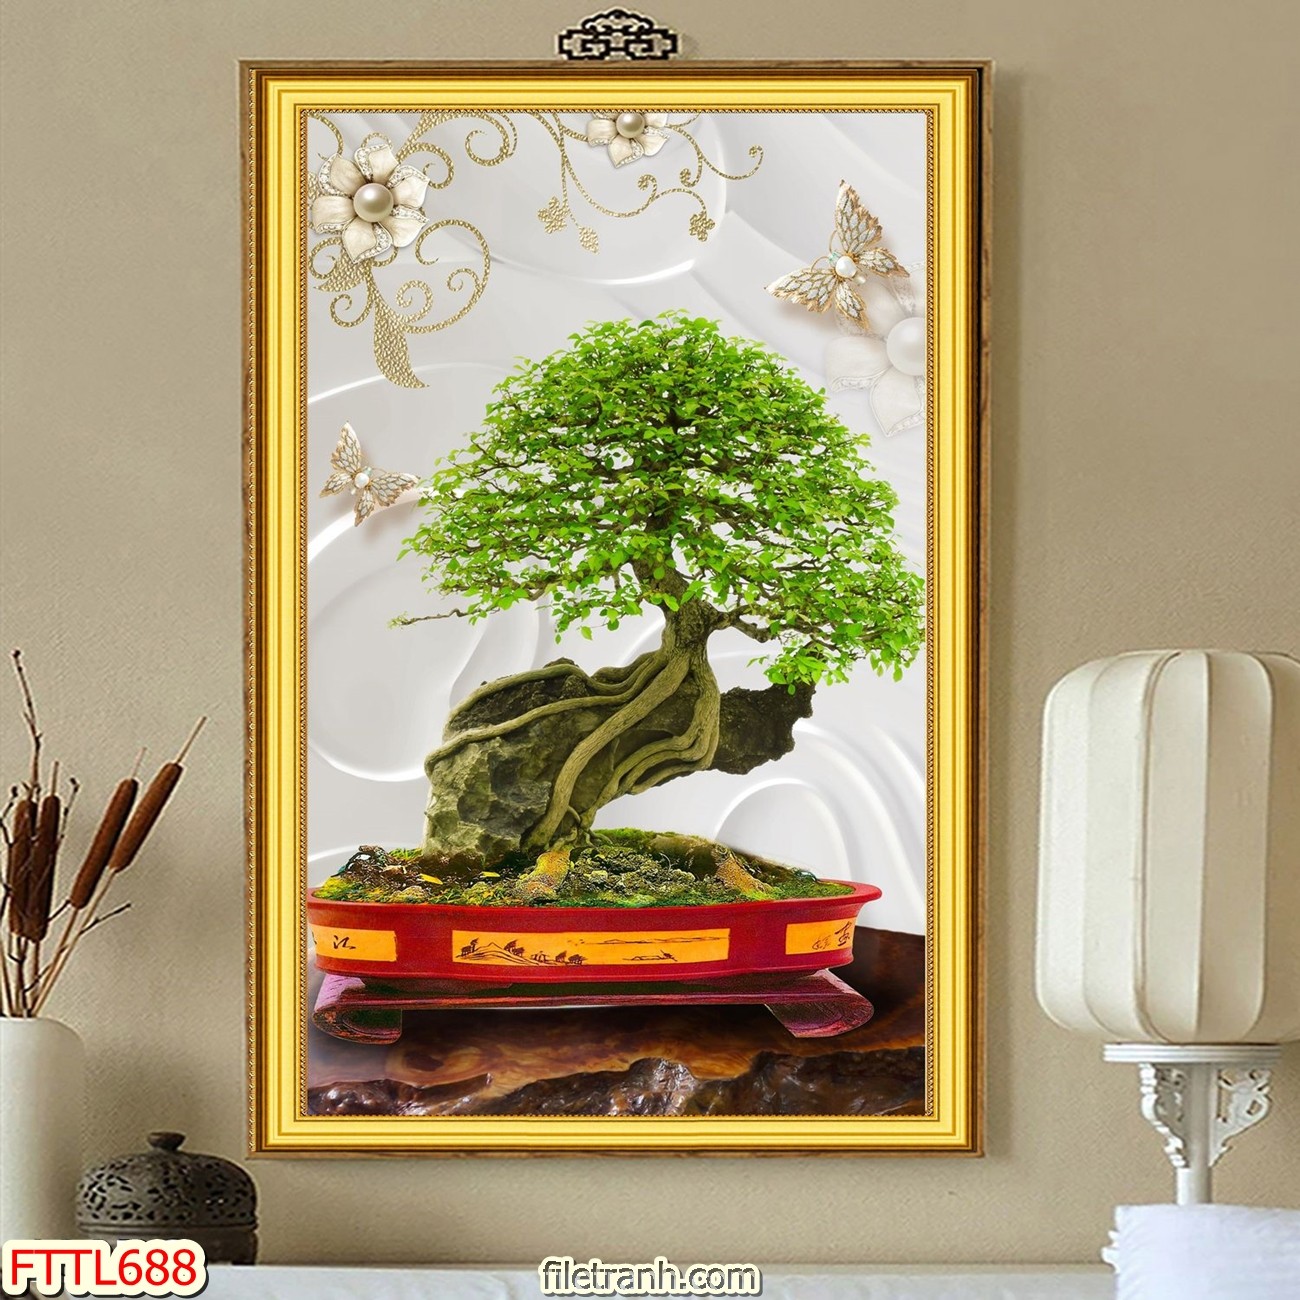 https://filetranh.com/file-tranh-chau-mai-bonsai/file-tranh-chau-mai-bonsai-fttl688.html